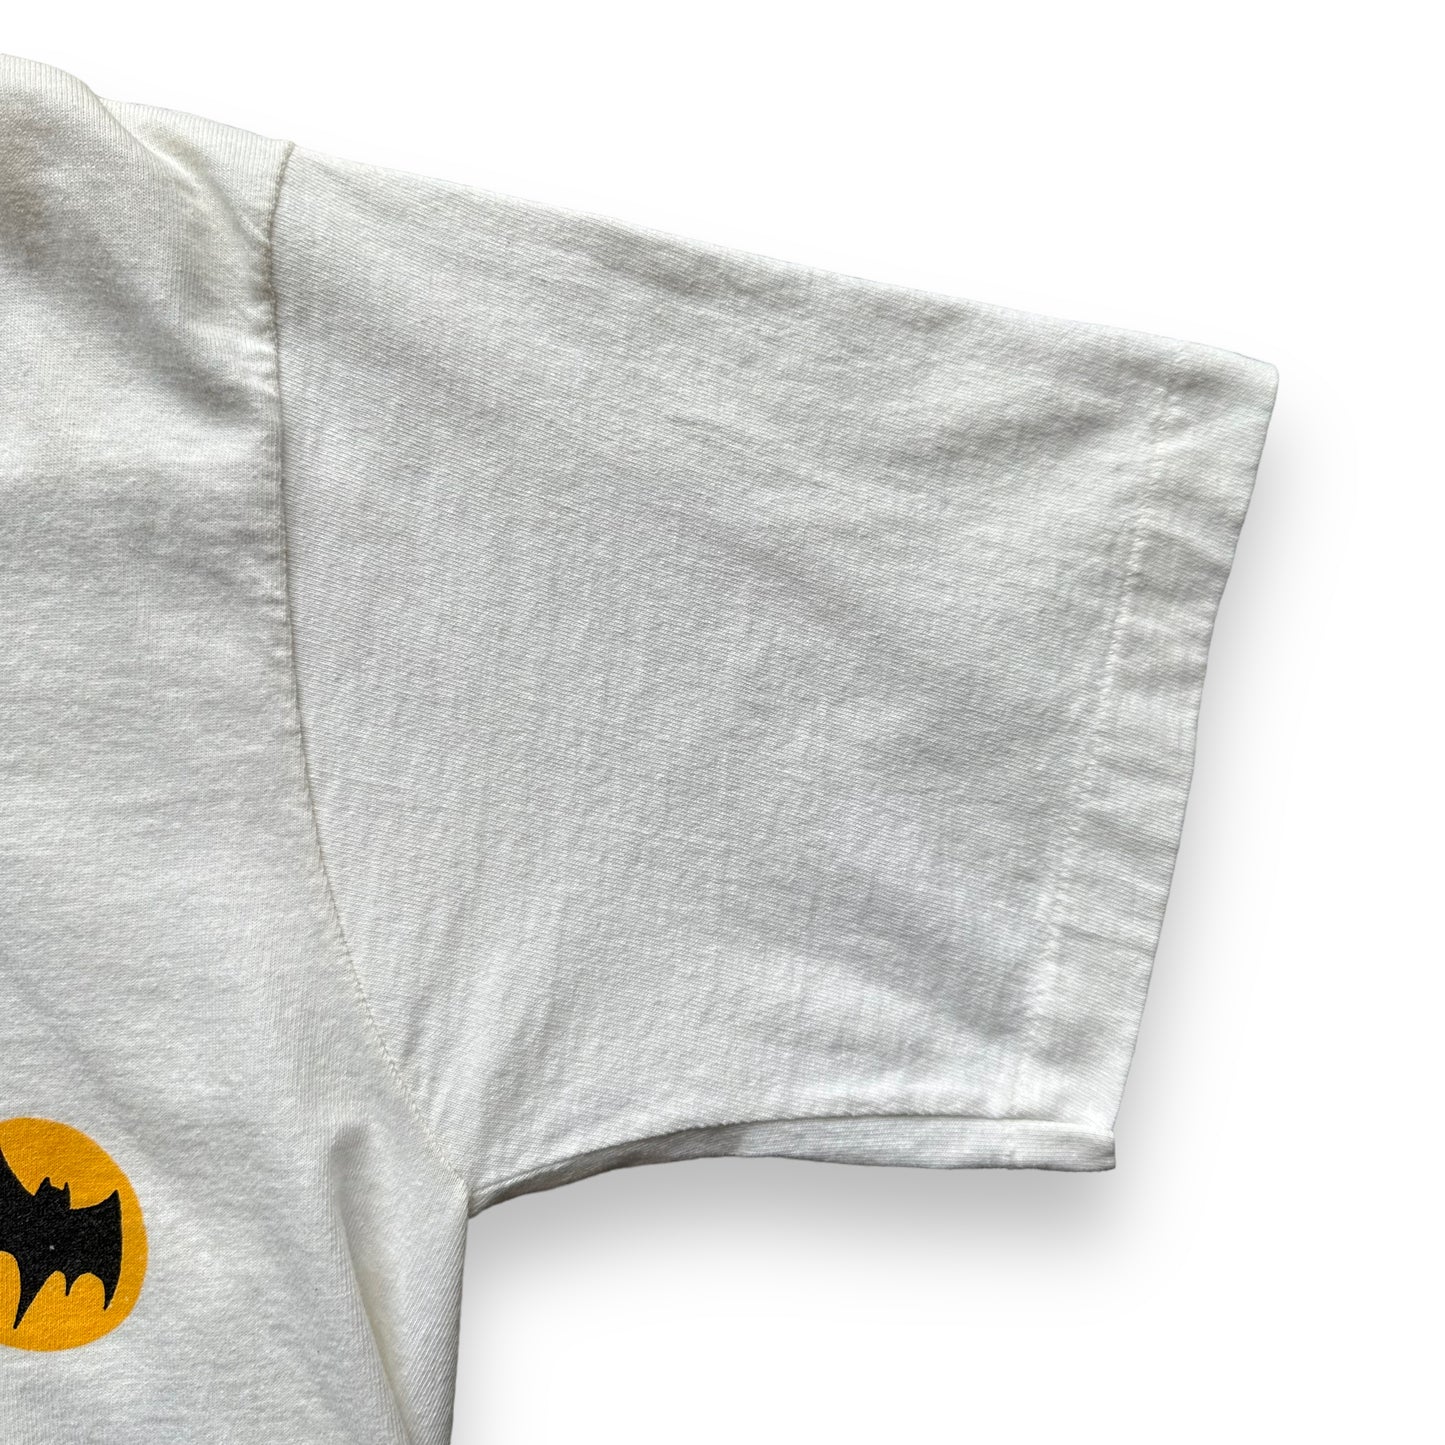 Single Stitch View of Vintage Adam West Batman Tee SZ M | Vintage Comic Book T-Shirts Seattle | Barn Owl Vintage Tees Seattle